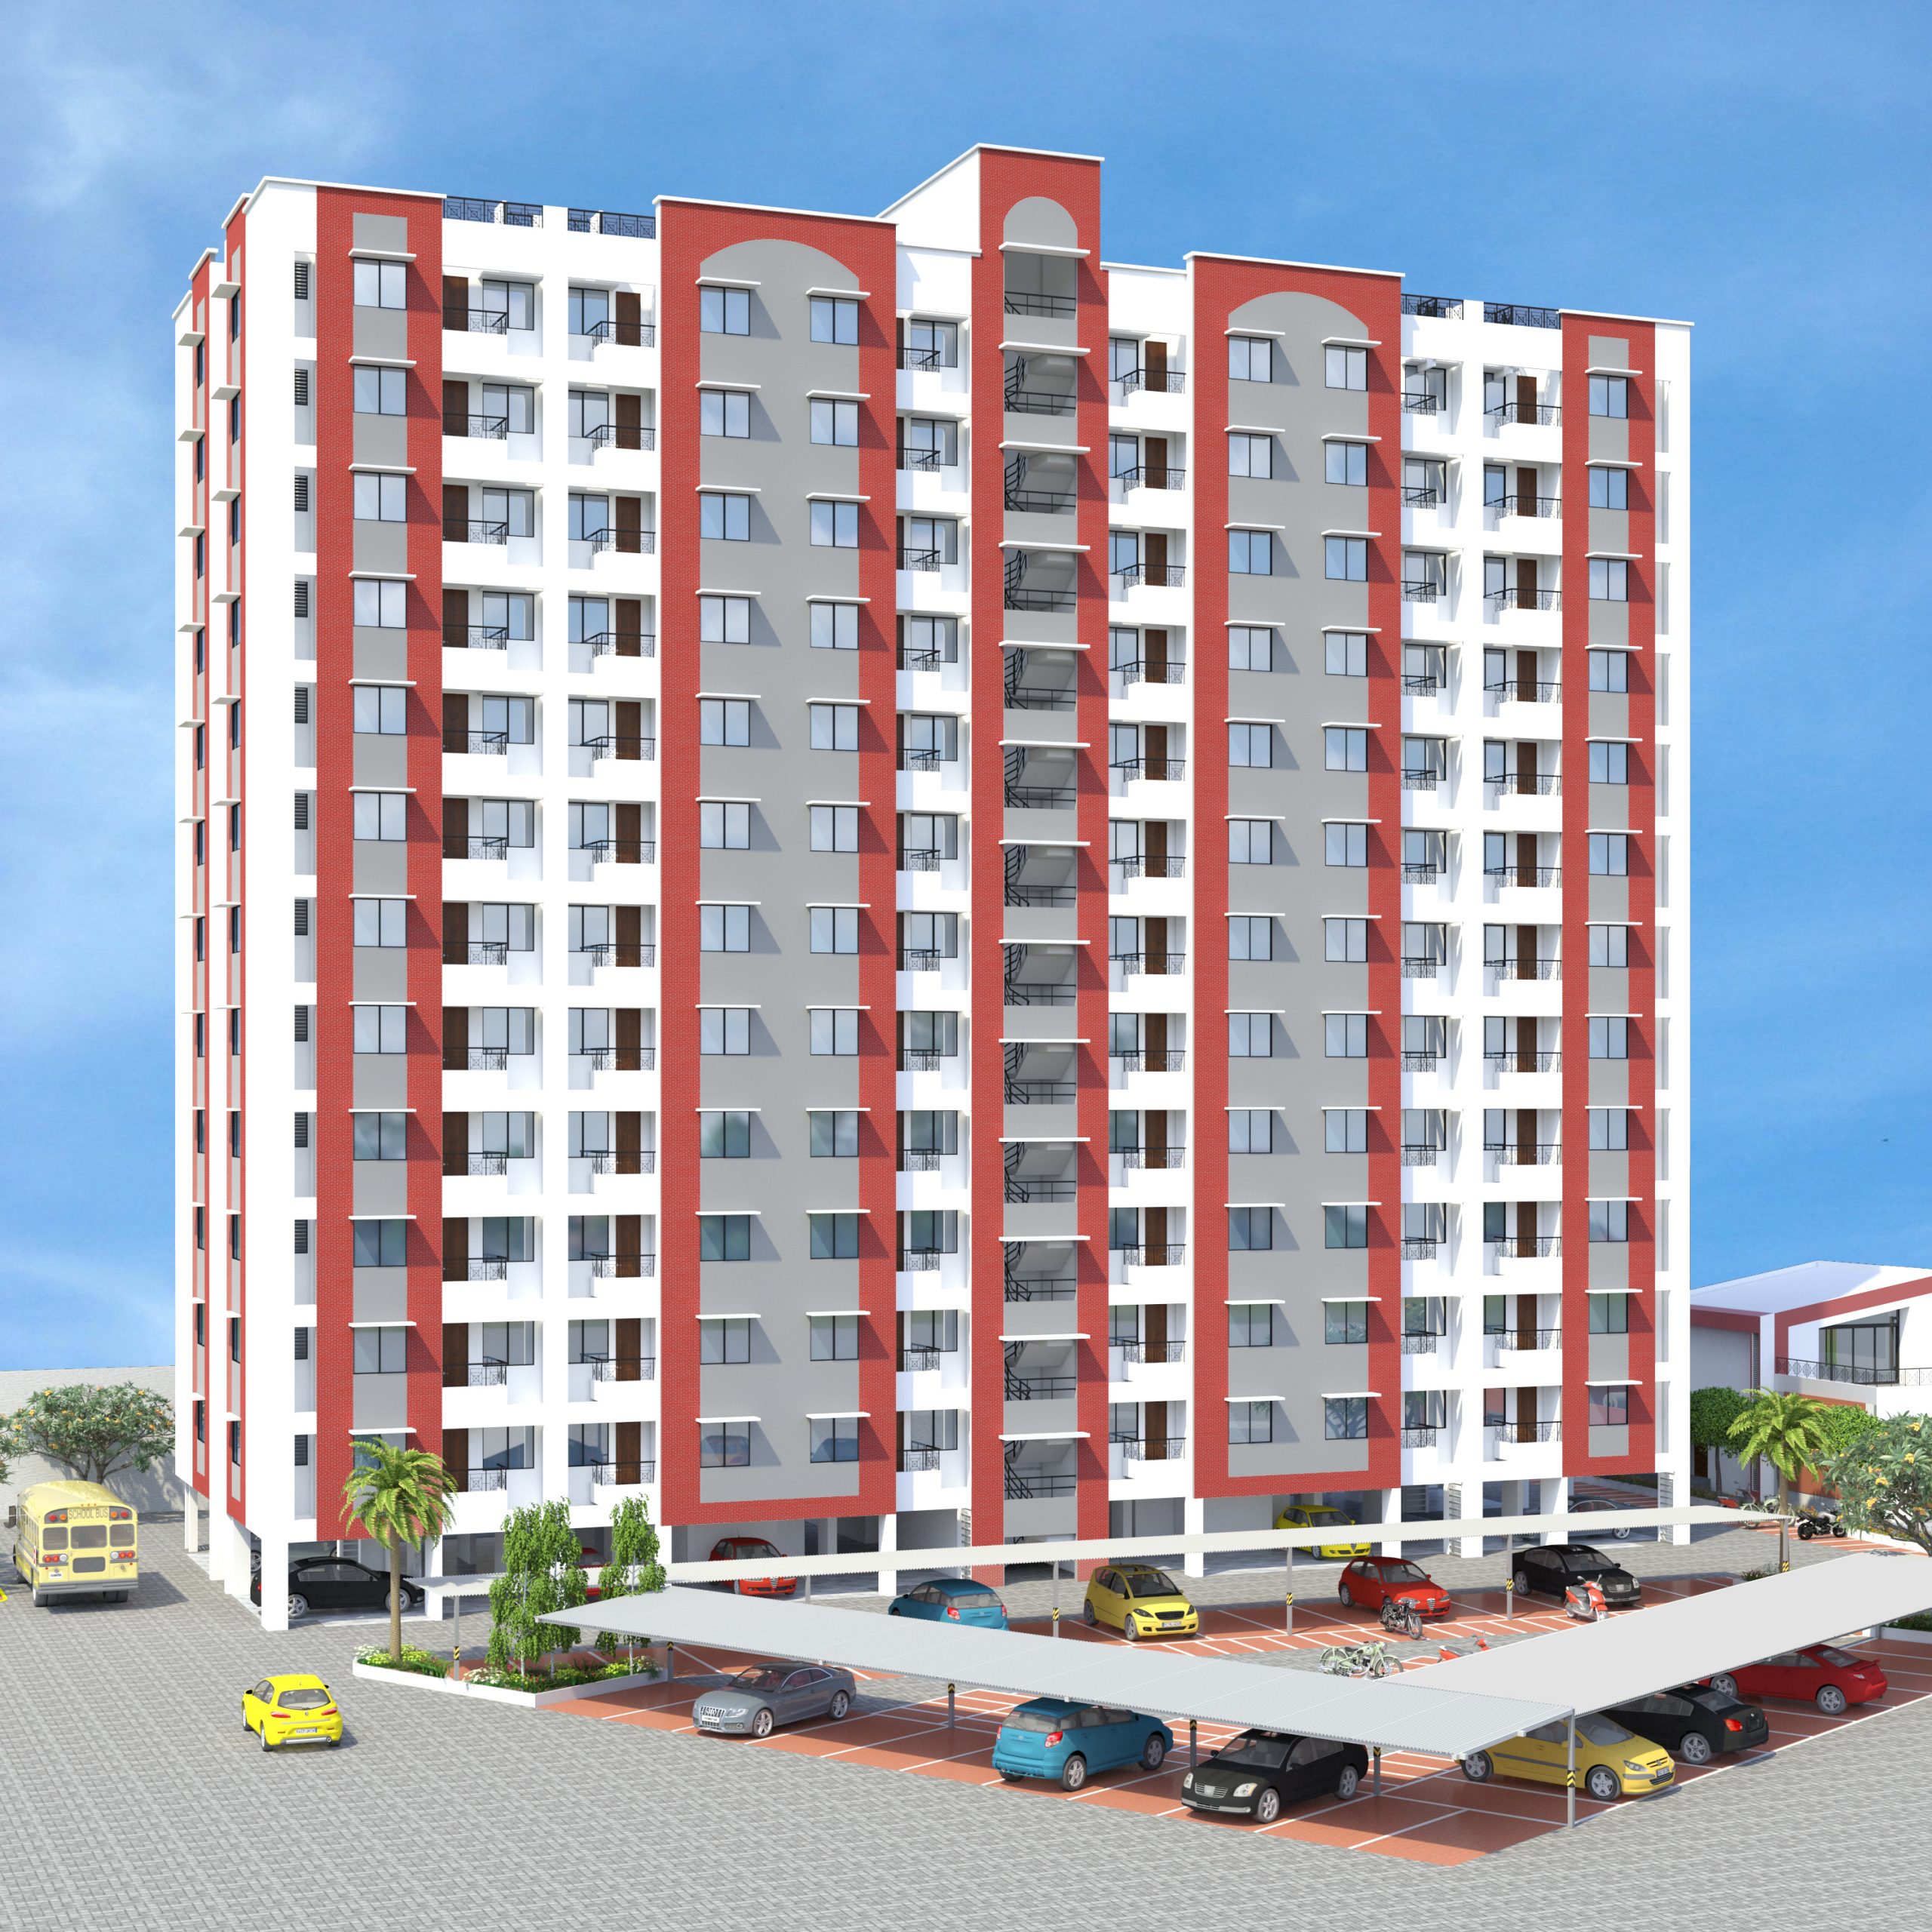 1 & 2 BHK flats in Chakan, Pune